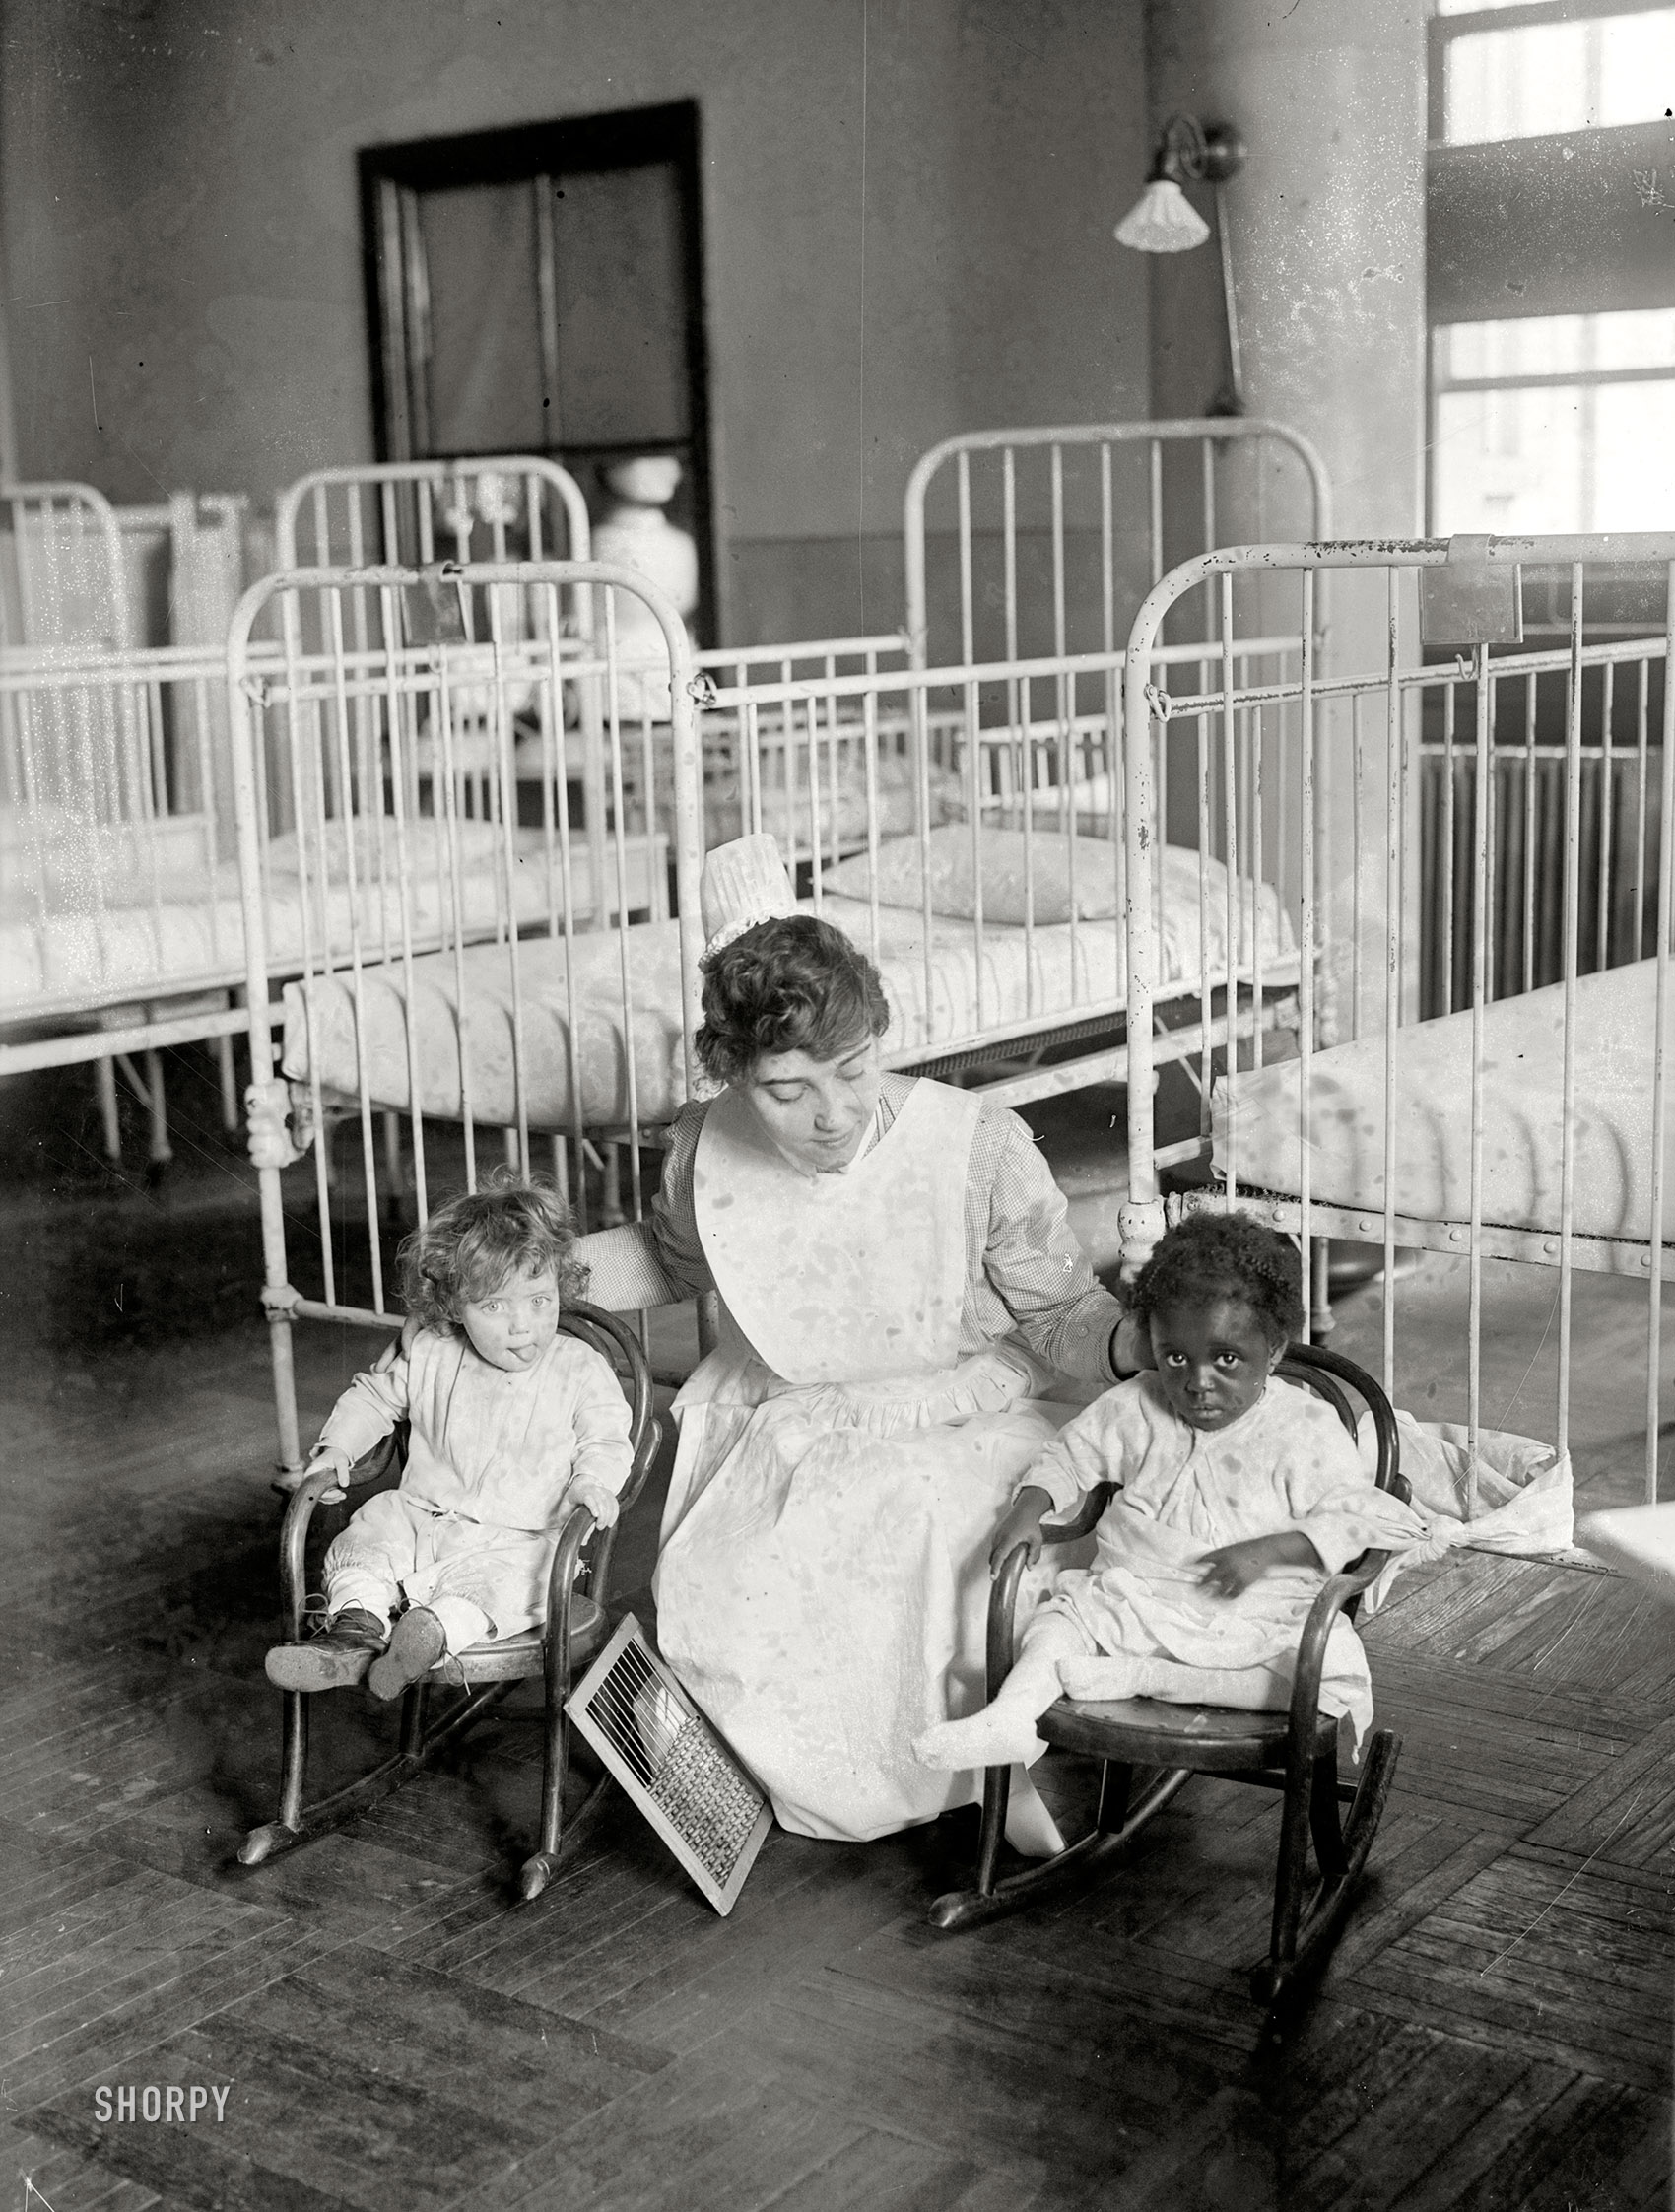 New York circa 1917. "St. Luke's Hospital children's ward." 5x7 glass negative, George Grantham Bain Collection. View full size.